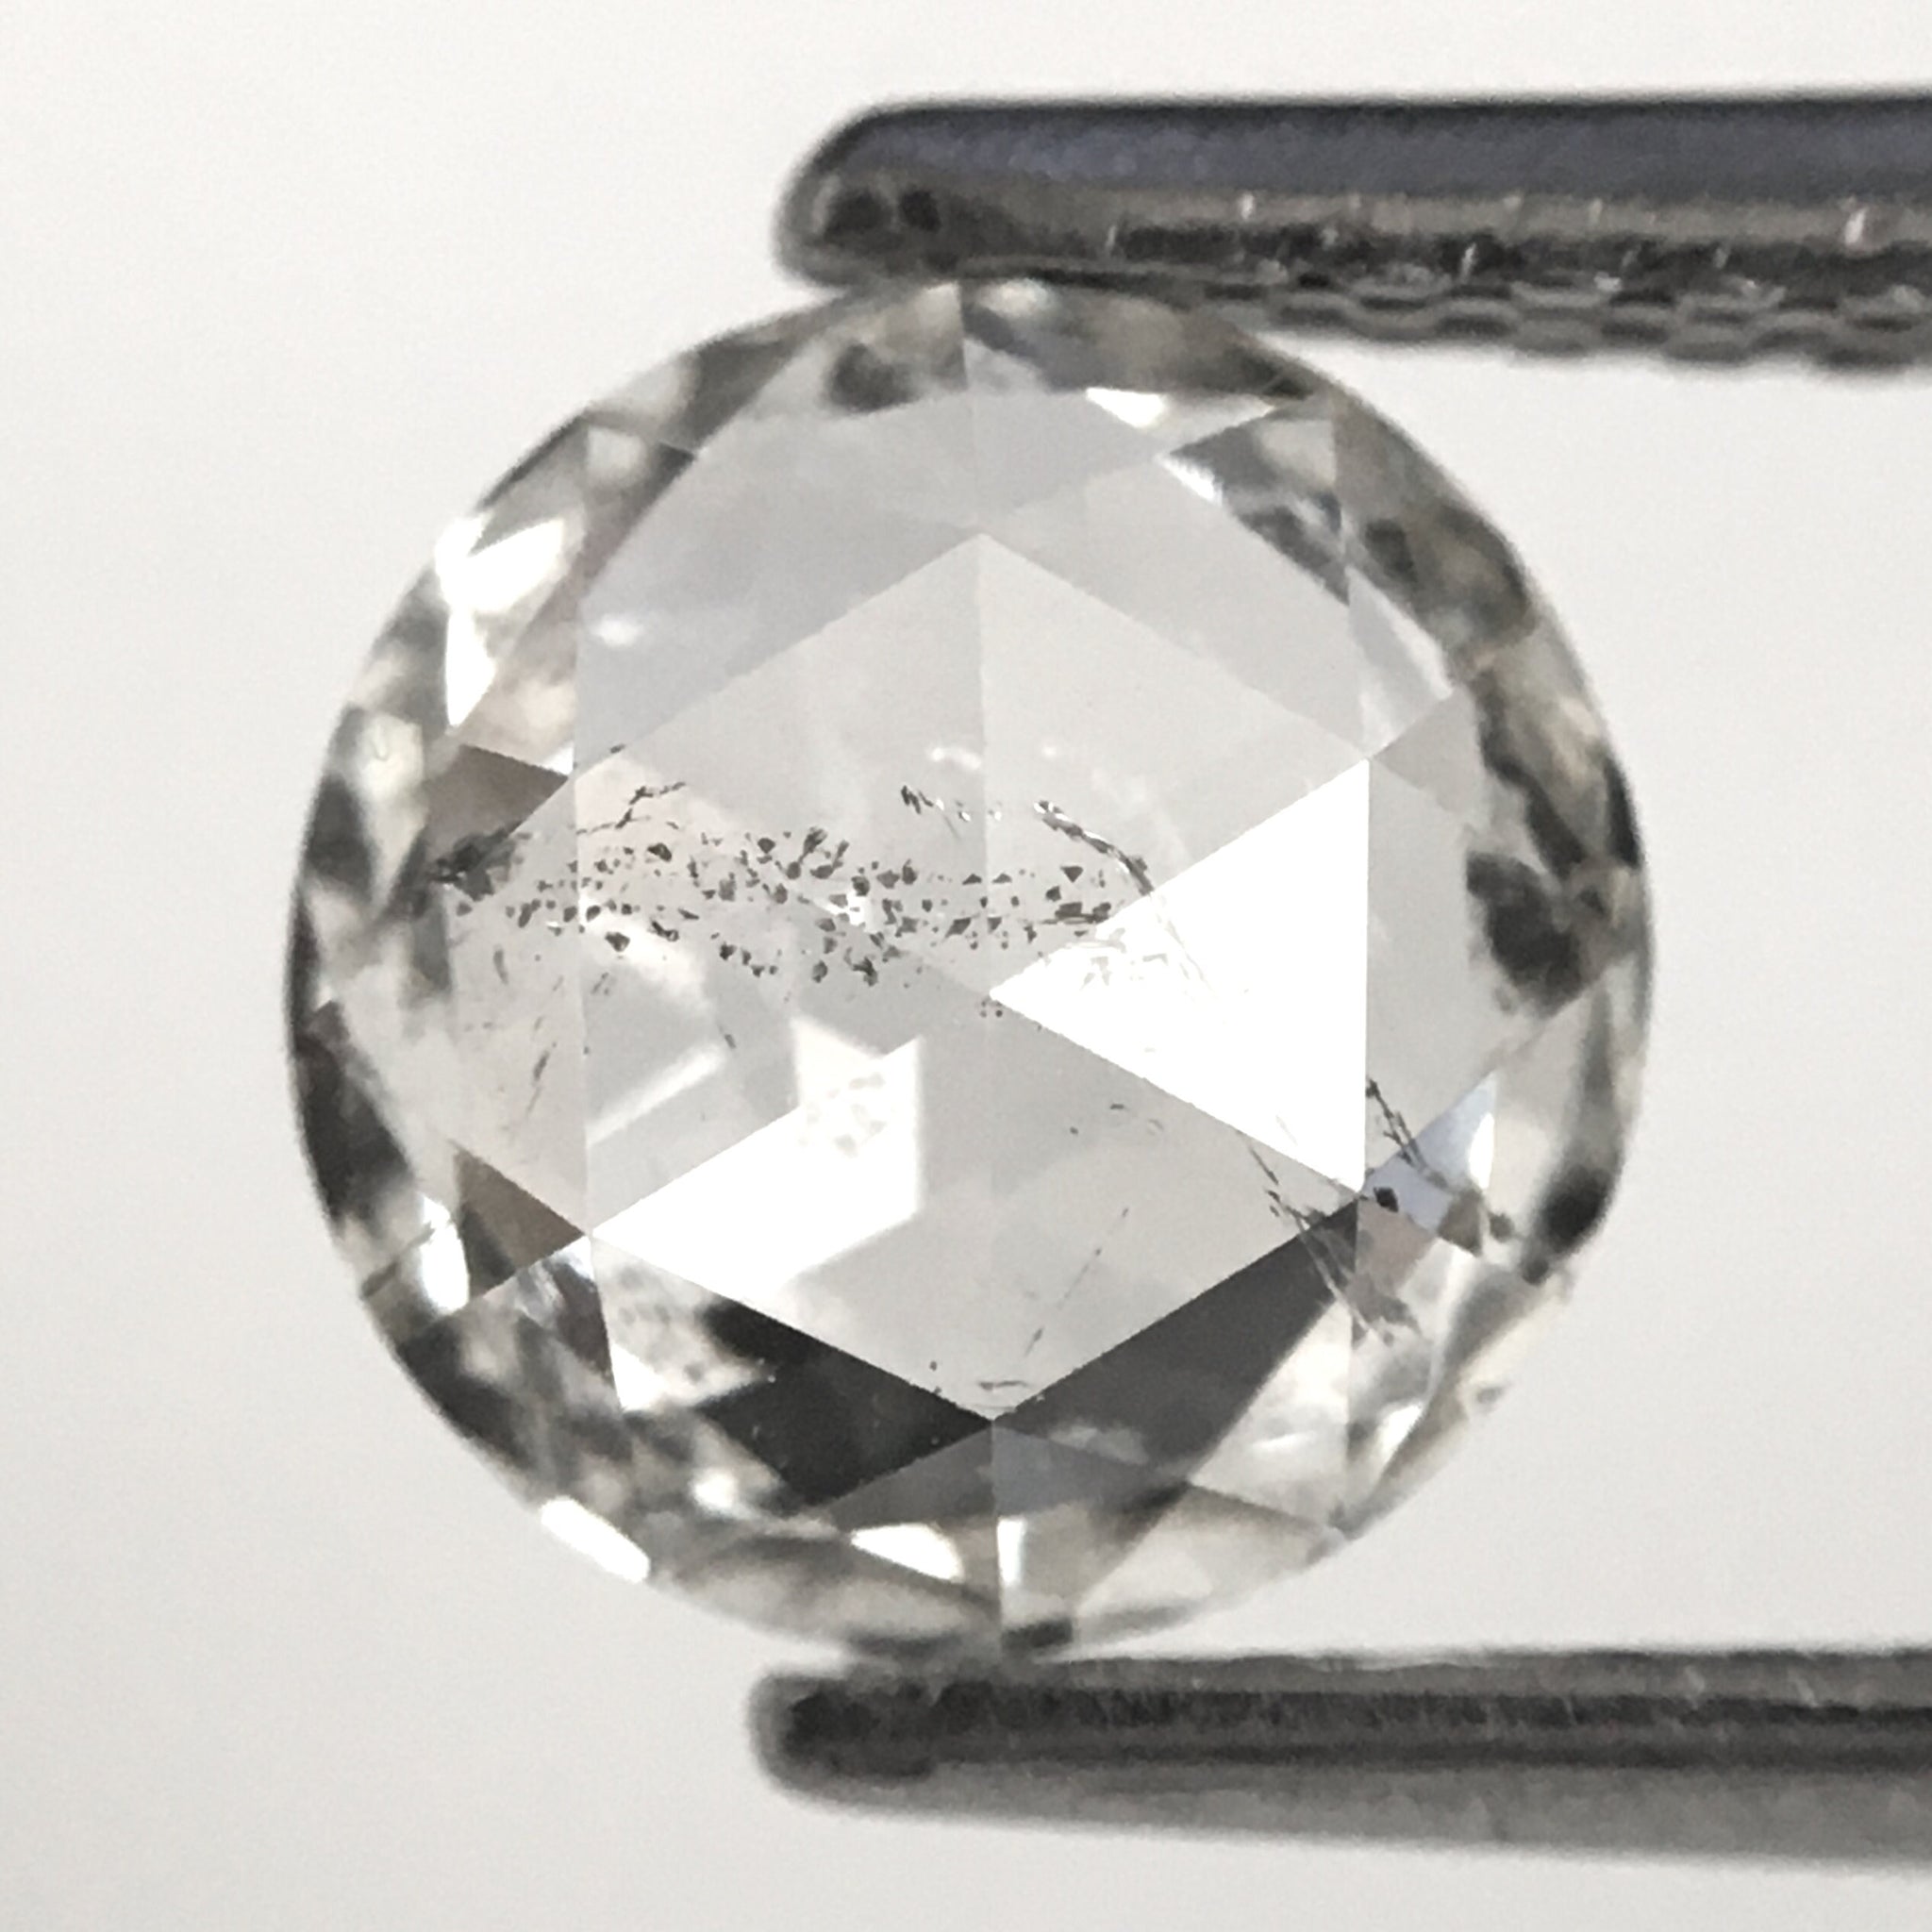 1.08 Ct White round rose cut natural loose diamond, 6.71 mm x 2.67 mm i1 clarity Full cut Natural Loose Diamond For Jewelry SJ81-08